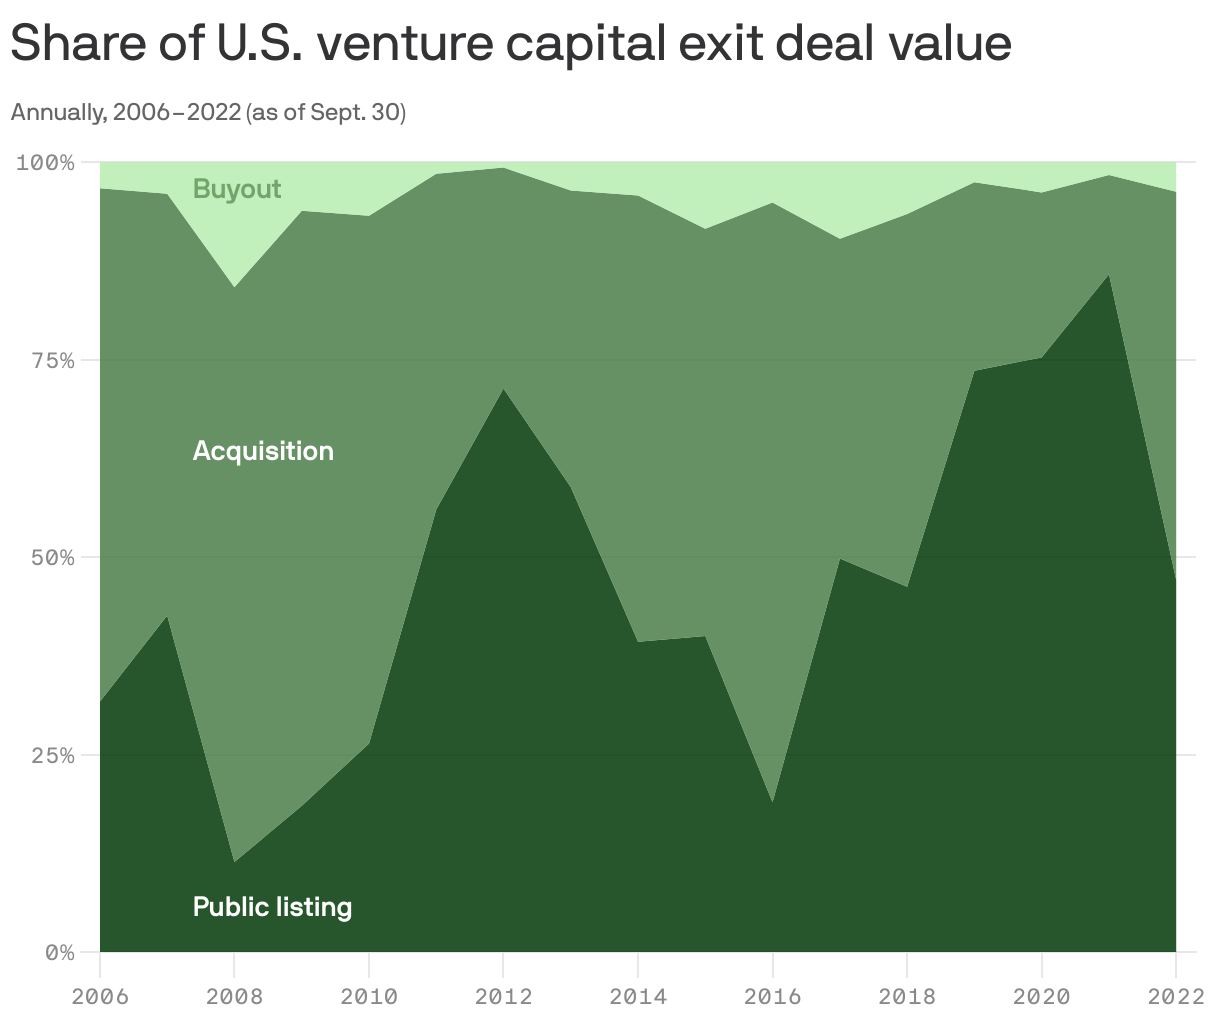 Share of U.S. venture capital exit deal value